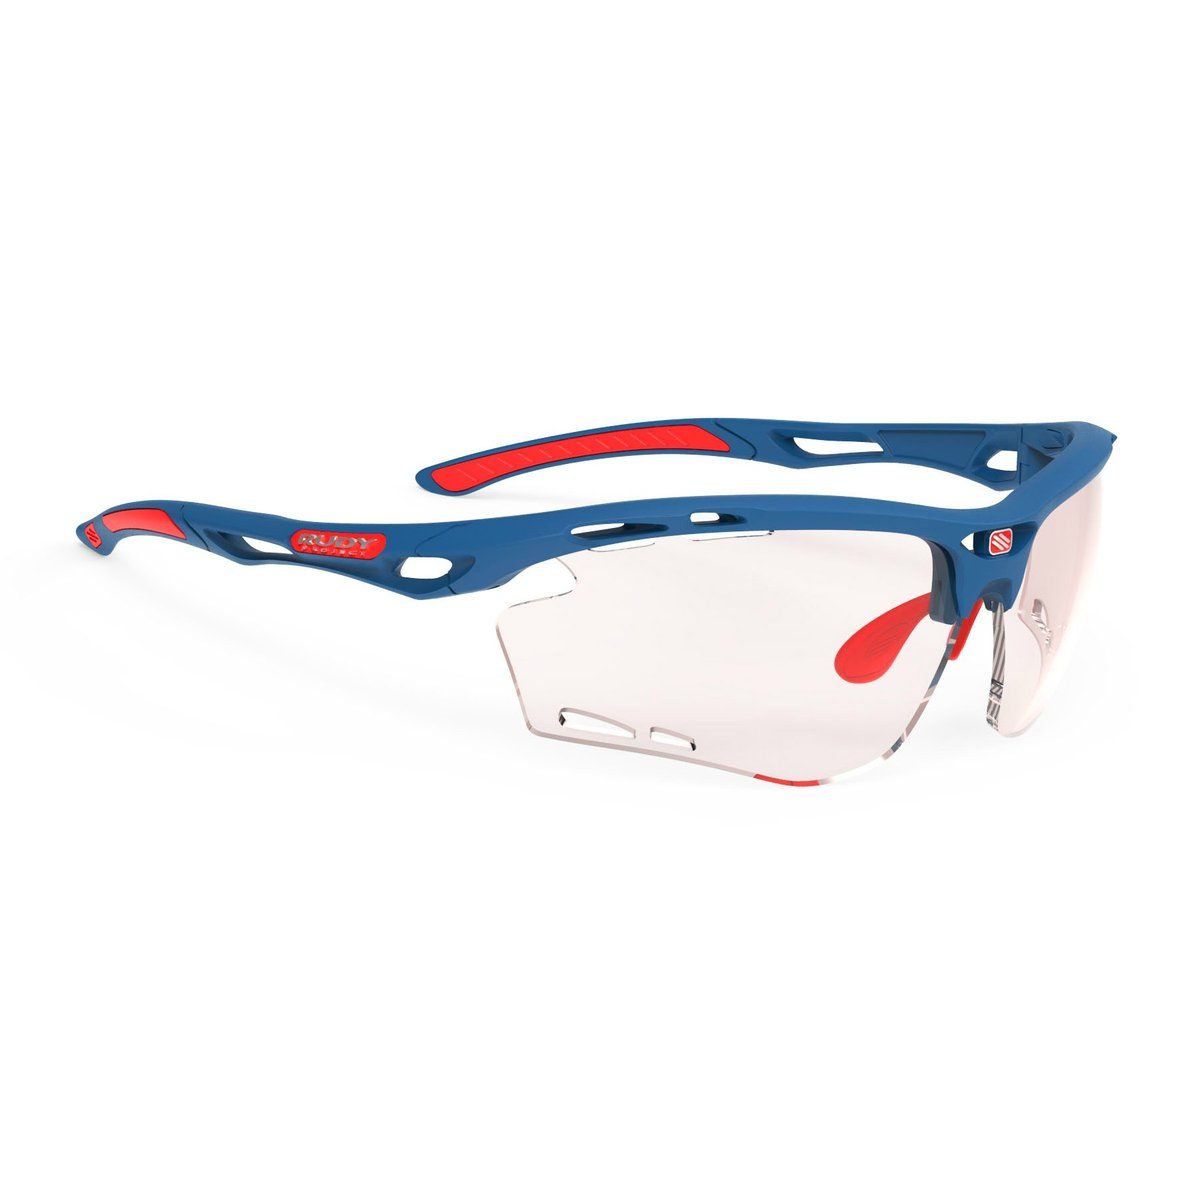 Shimano CE-S71R Sunglasses Black Silver Cycling Eyewear Lightweight UV Blocking 